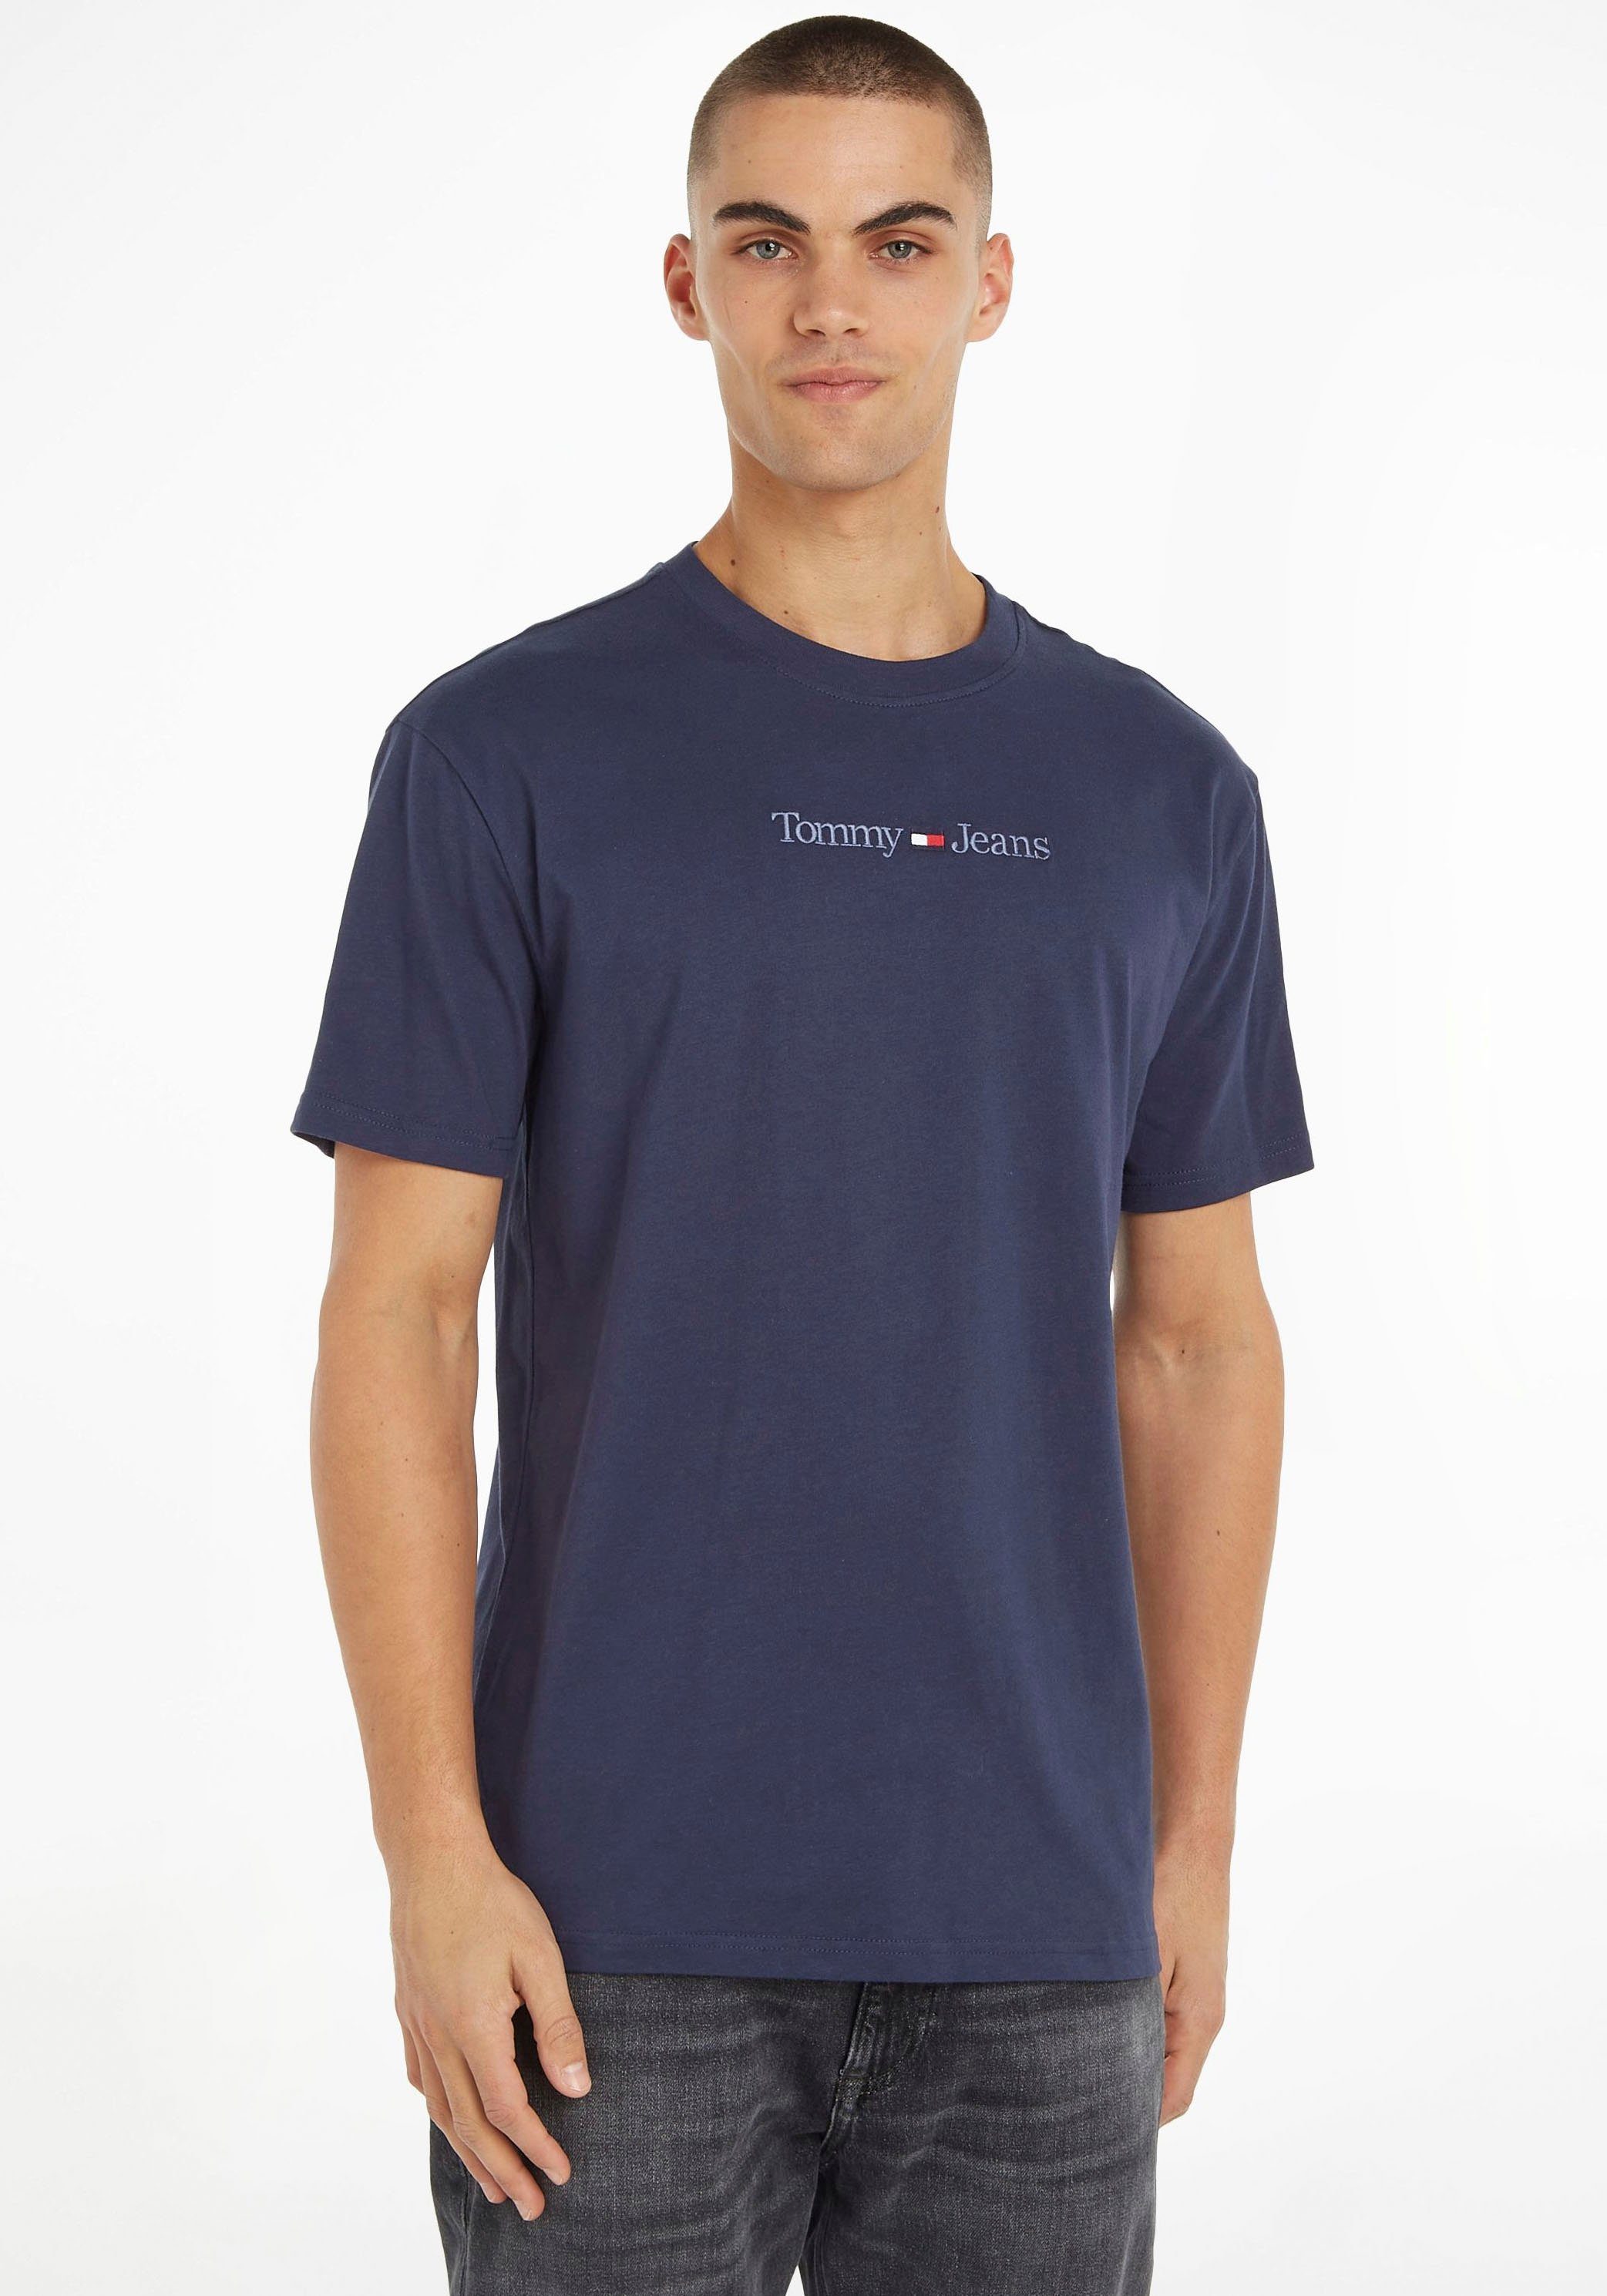 SMALL Tommy T-Shirt Jeans Twilight Navy CLSC TEE TEXT TJM